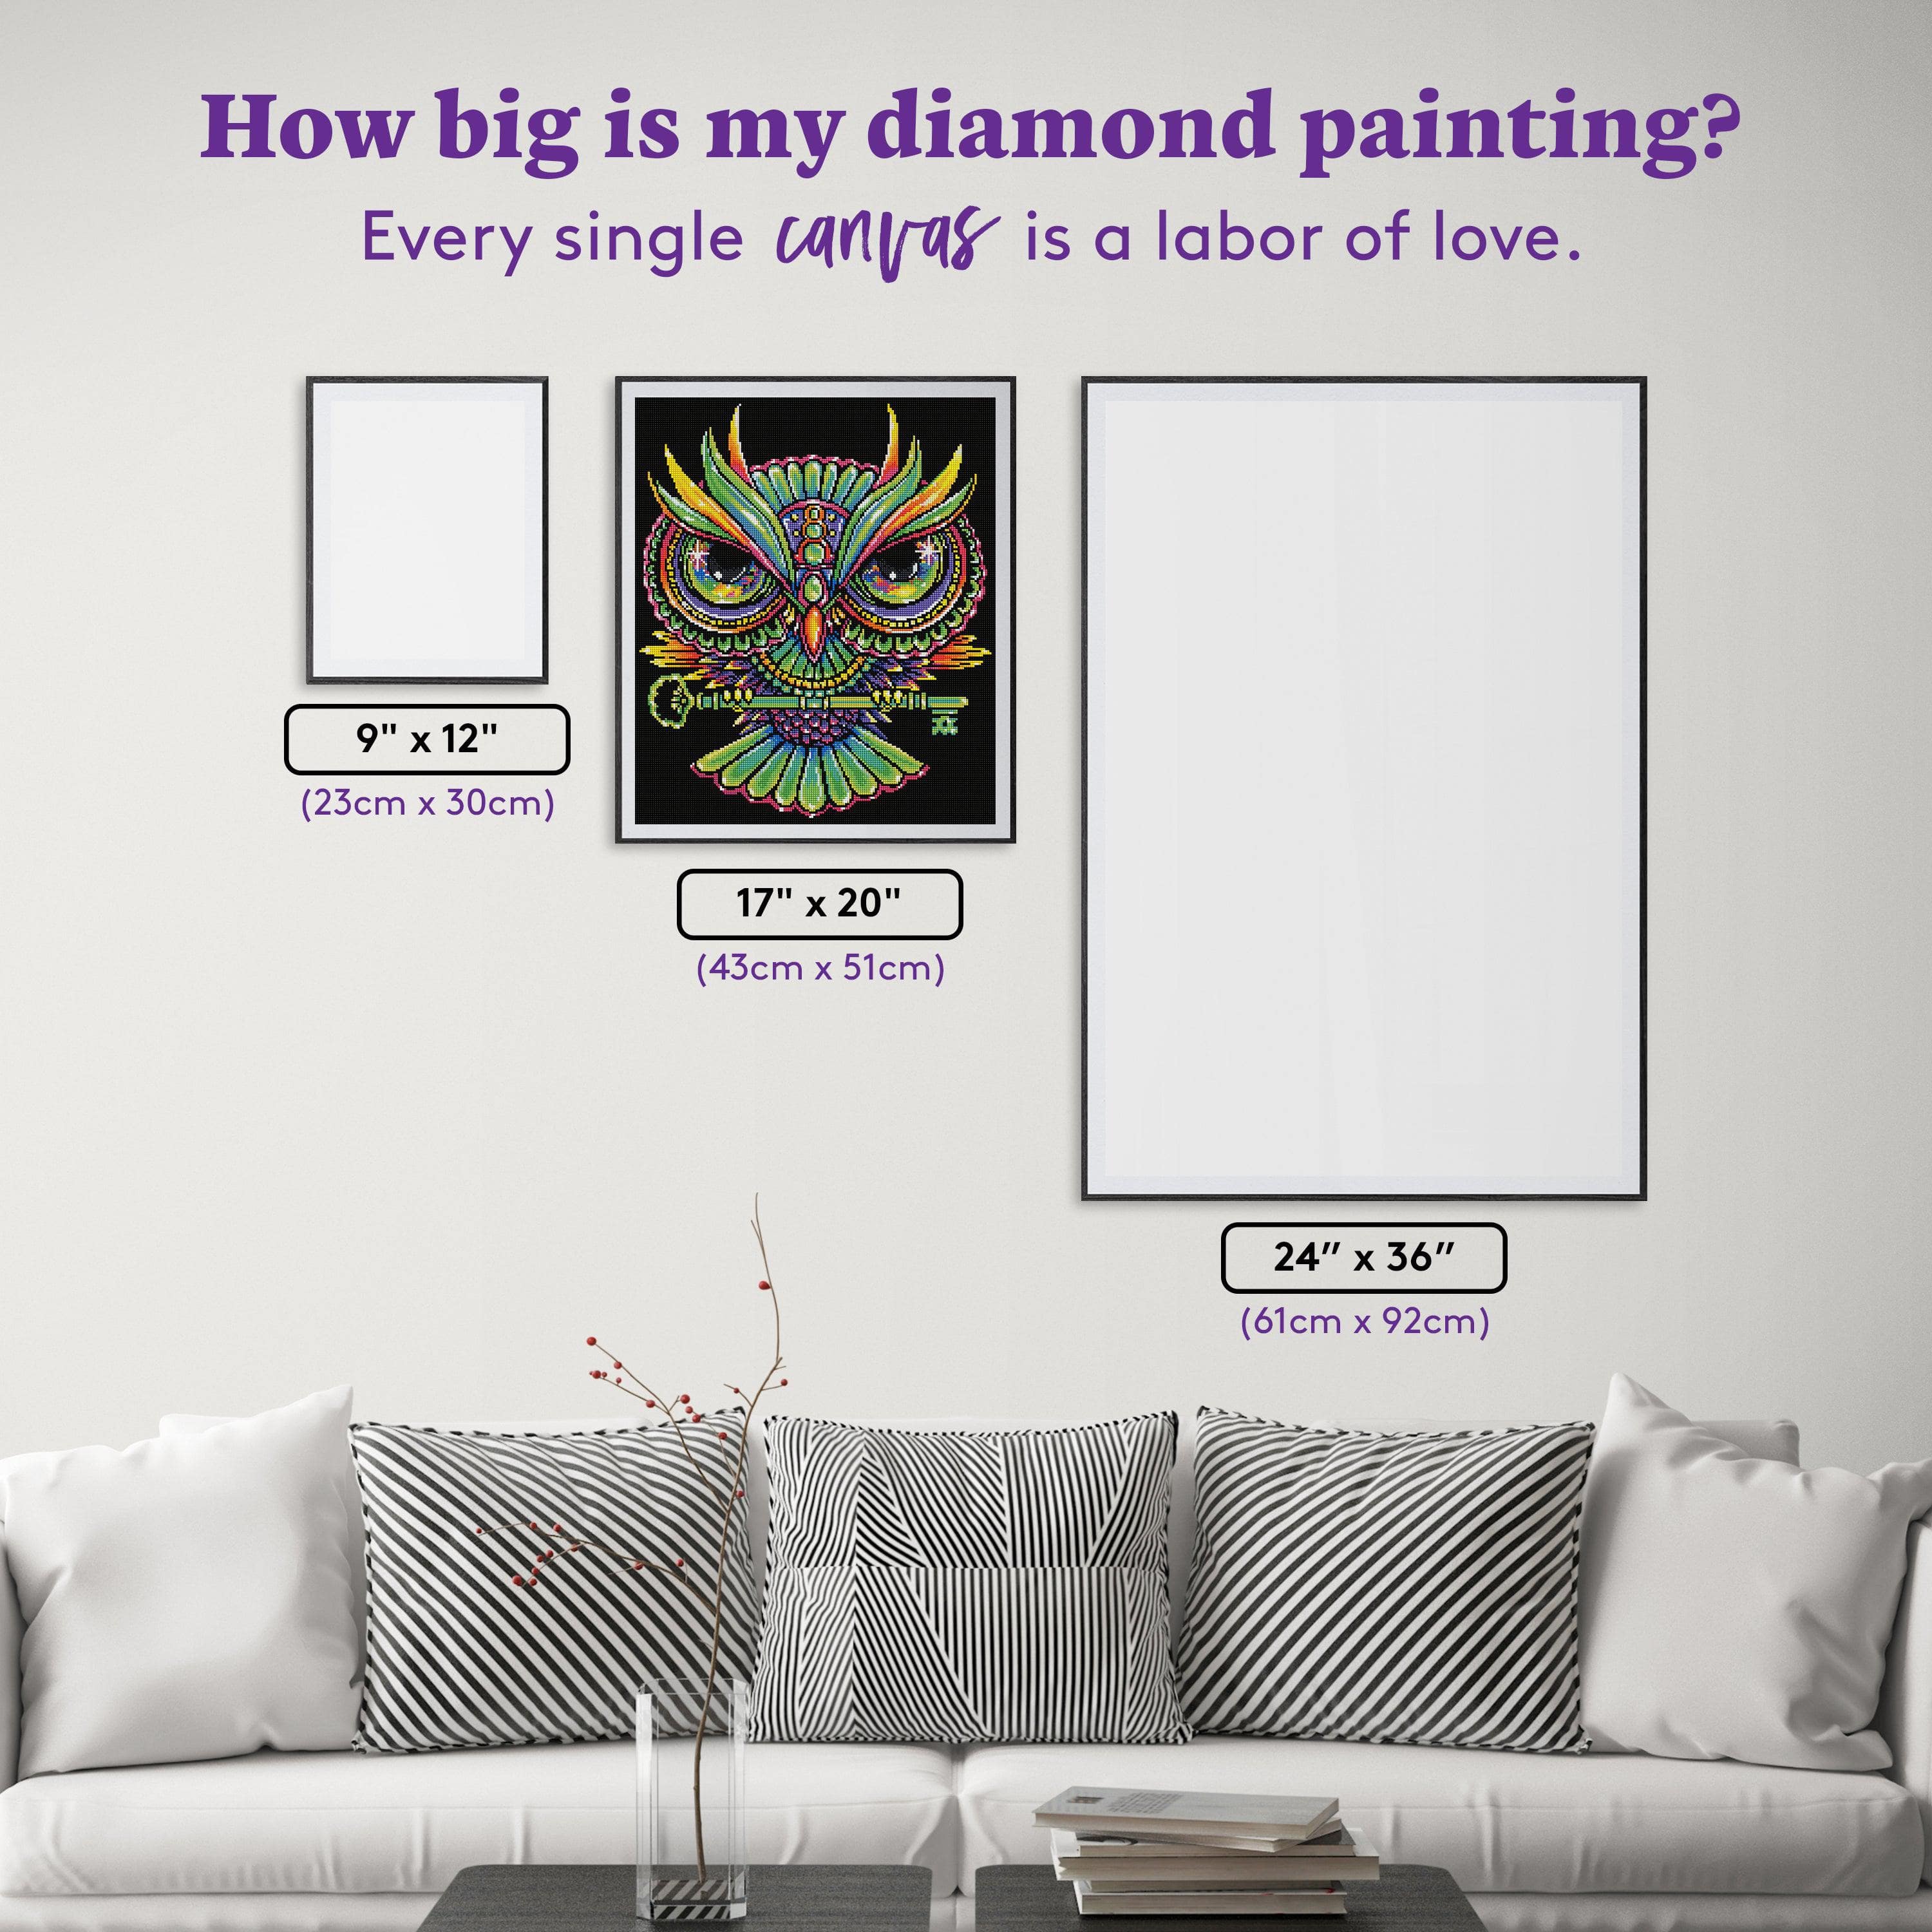 DAERLE DIY 5D Diamond Painting Kit Completo Loro, Cristal Pintura